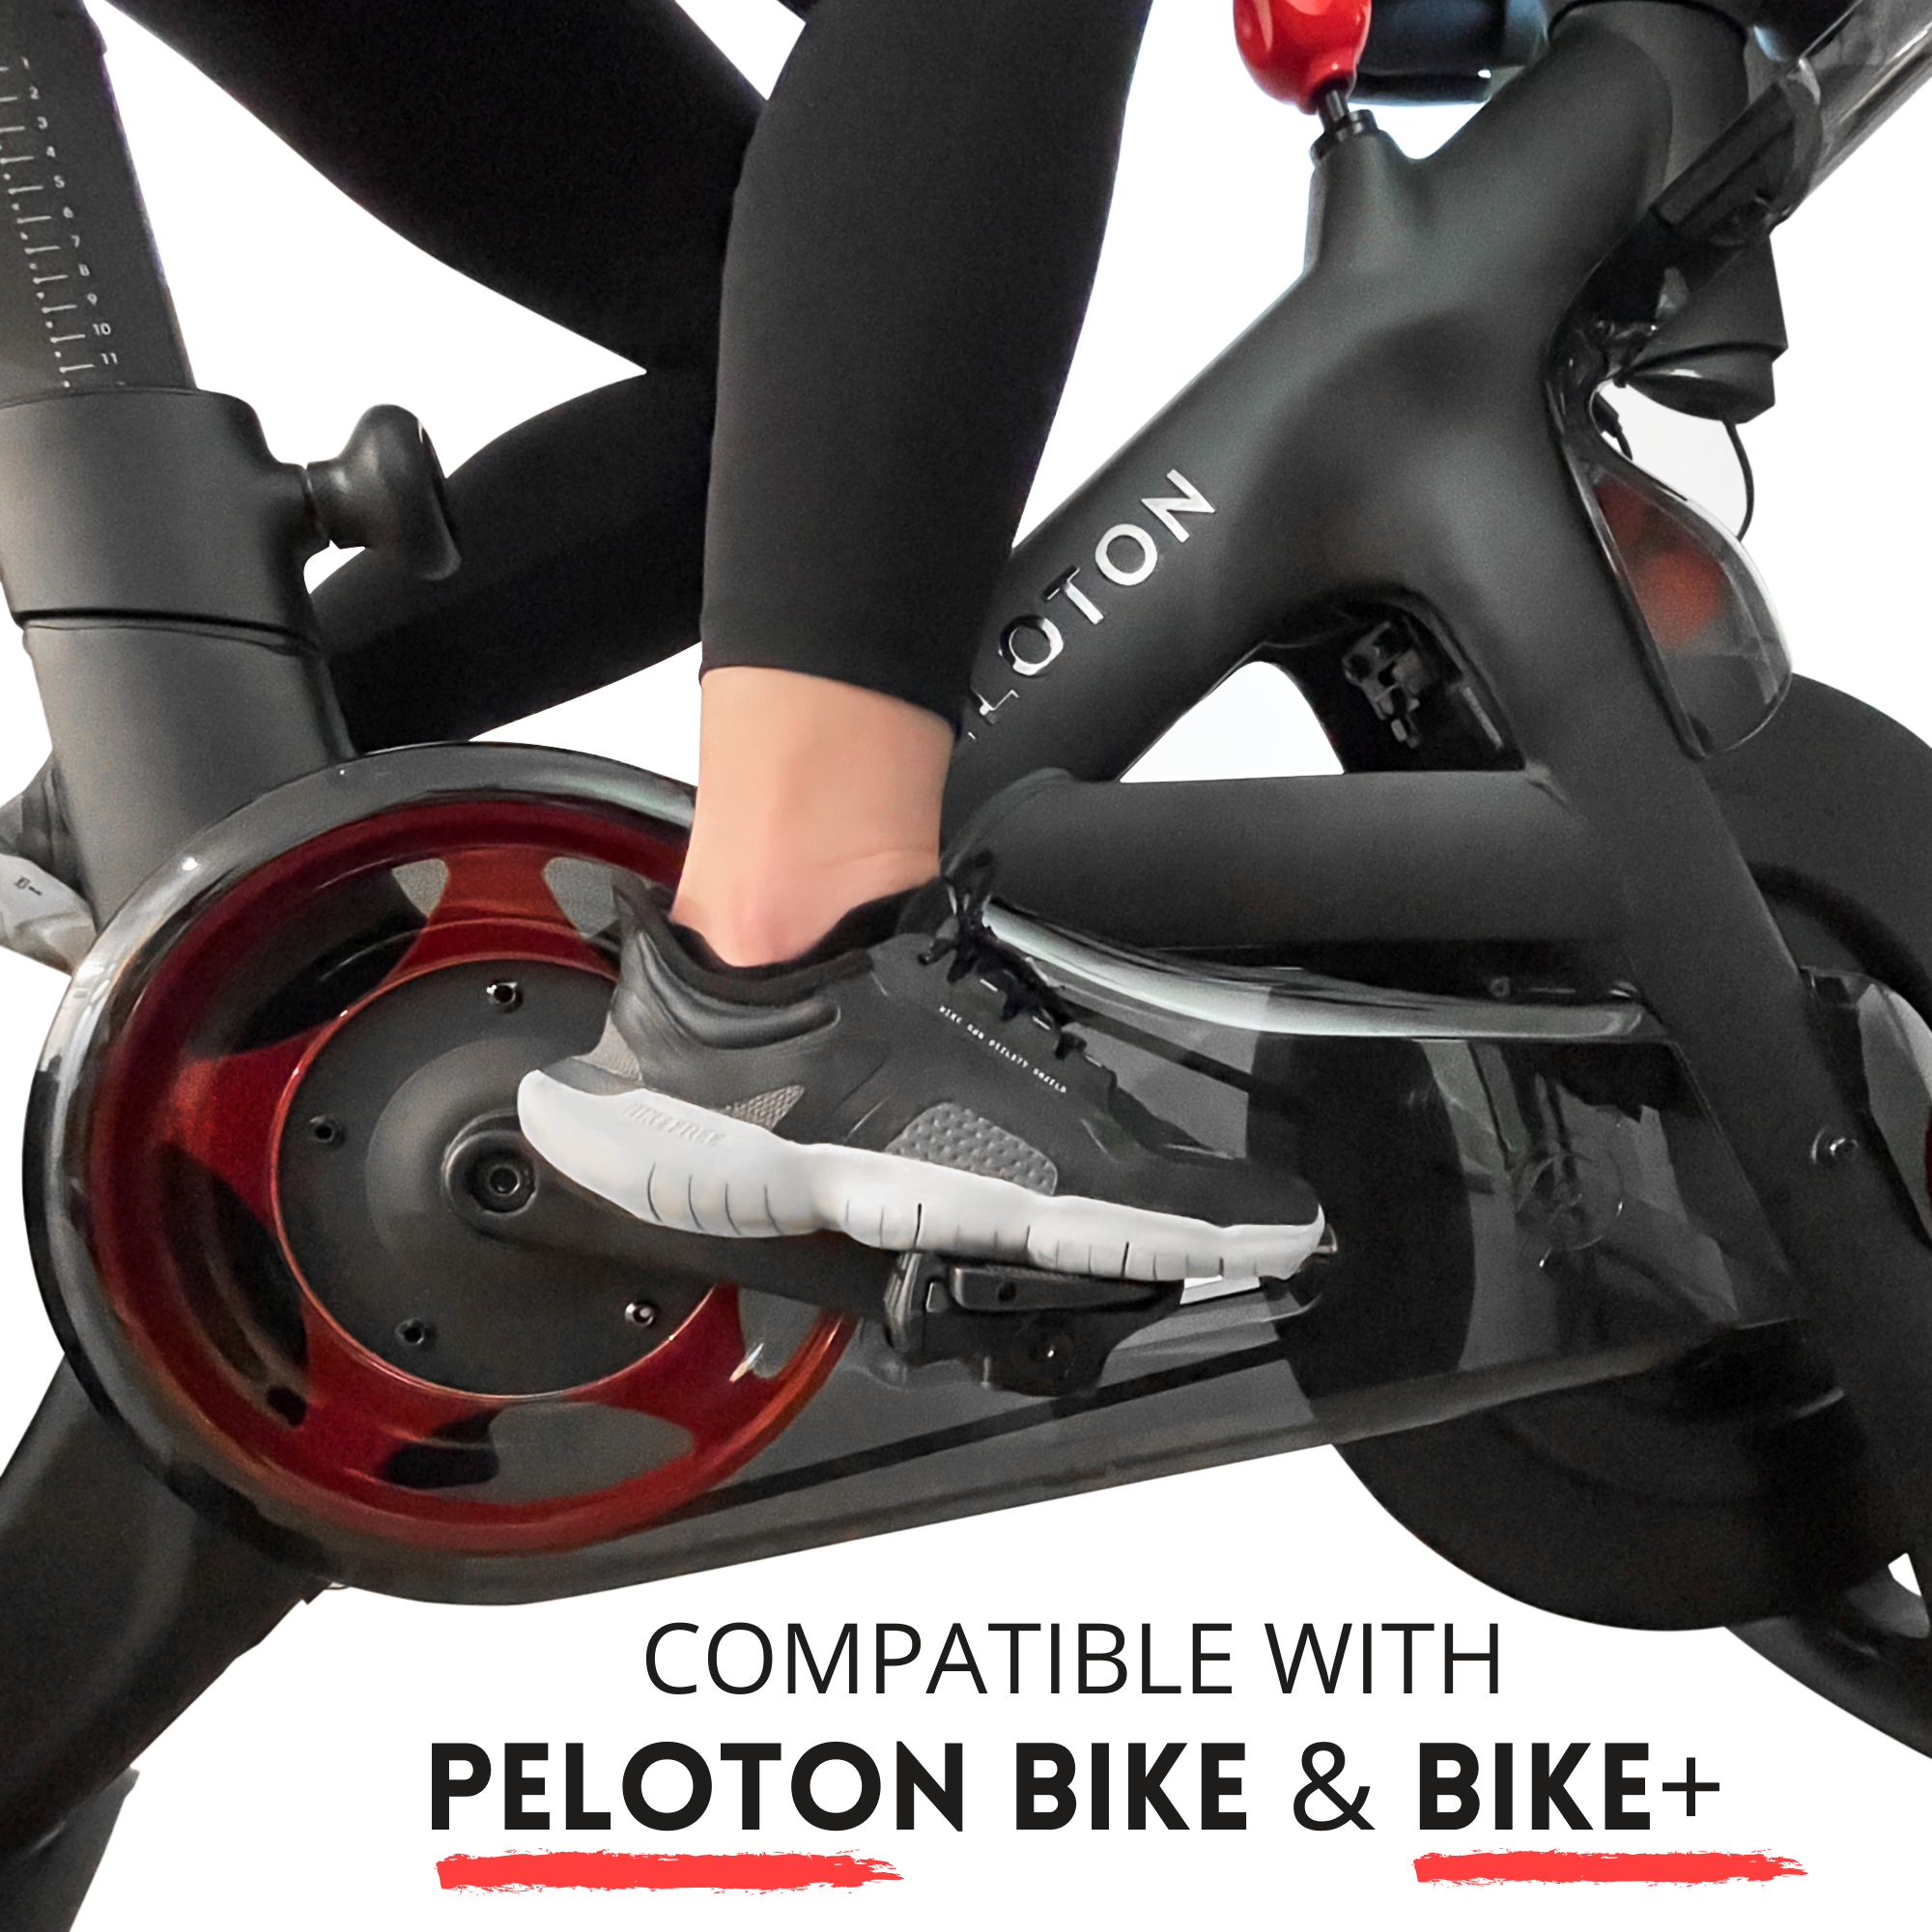 Pedal Converter for Regular Shoes - Peloton Bike & Bike+ Compatible